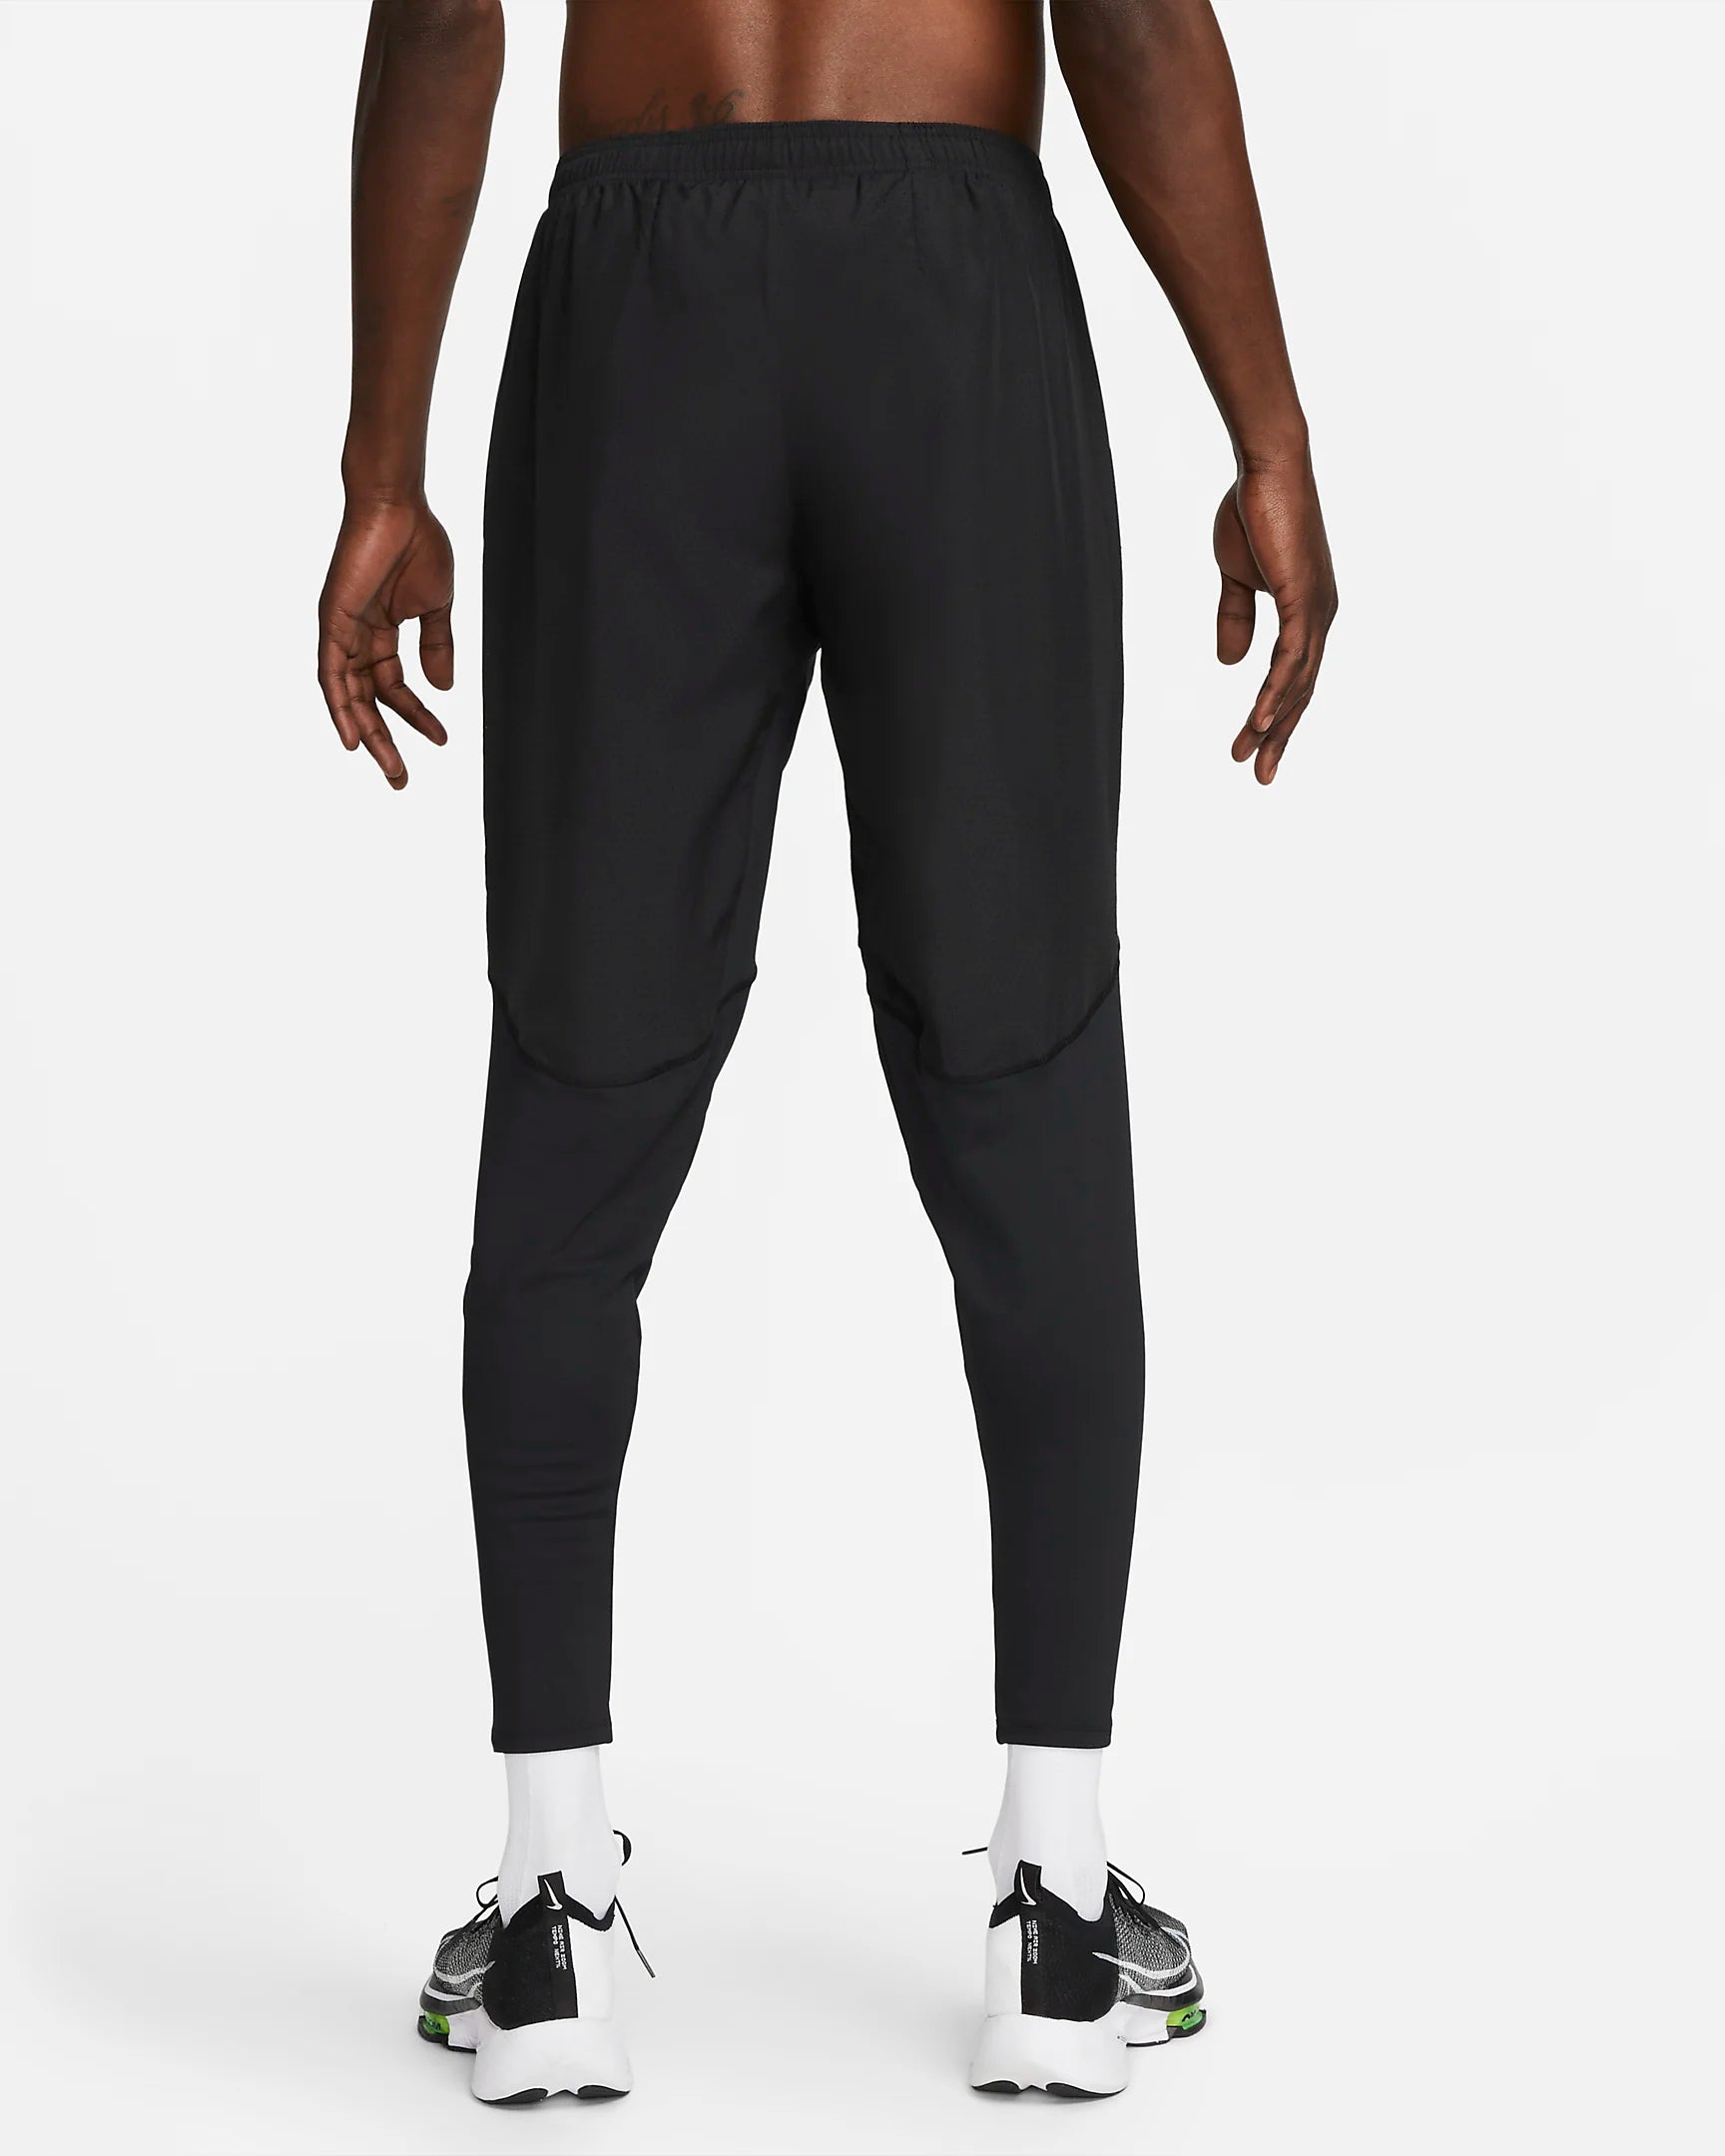 Nike Dri-Fit Pants - Black